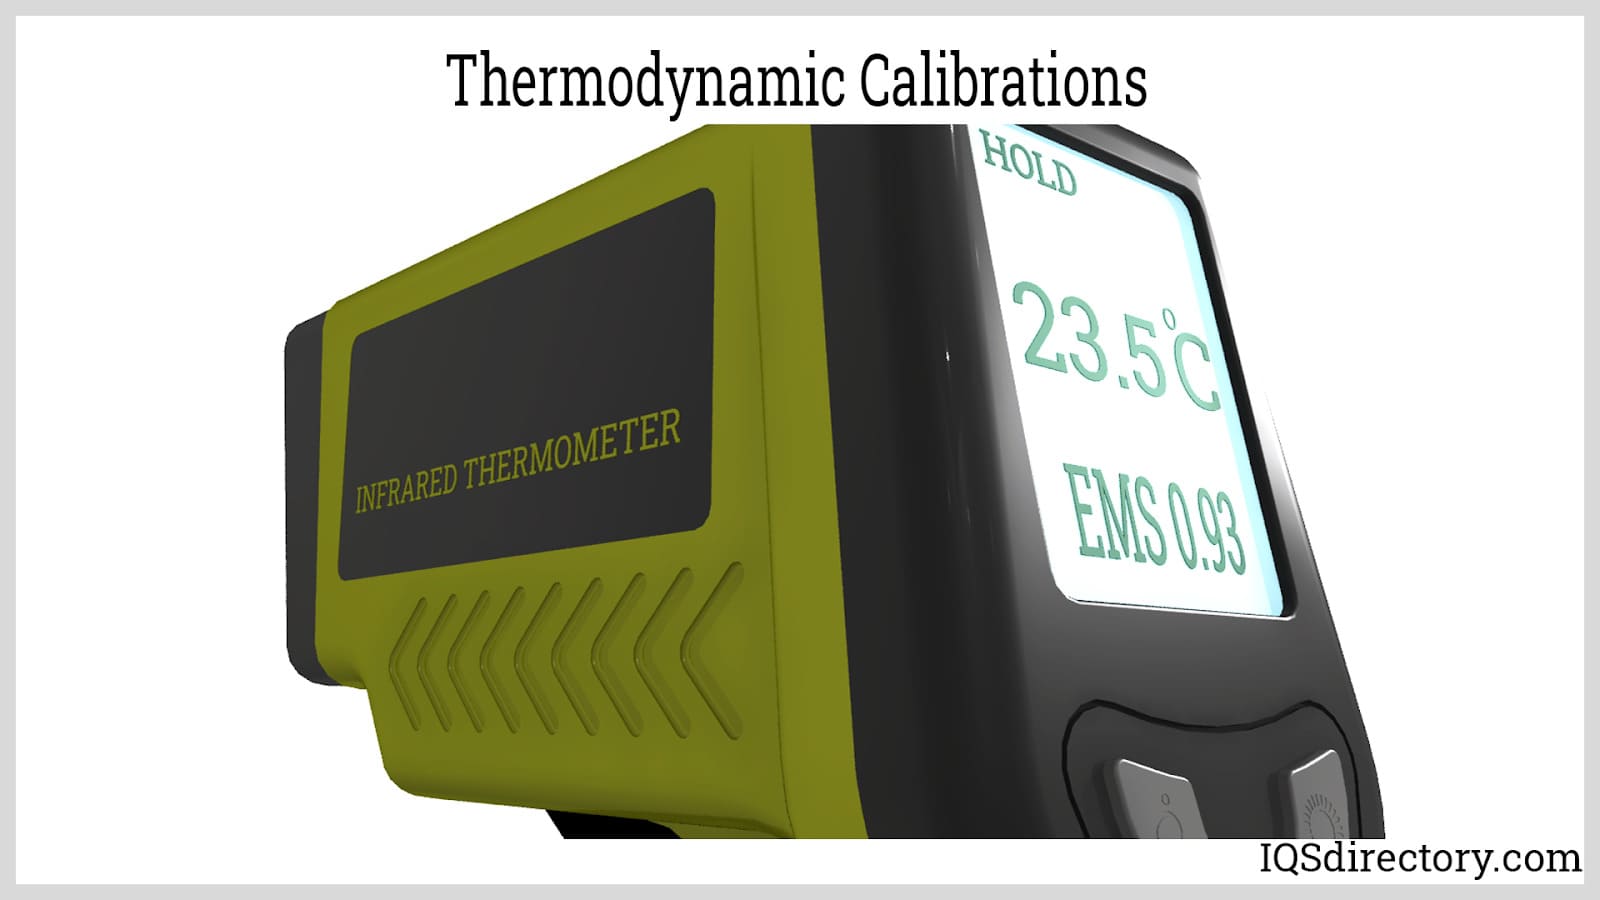 Thermodynamic Calibrations